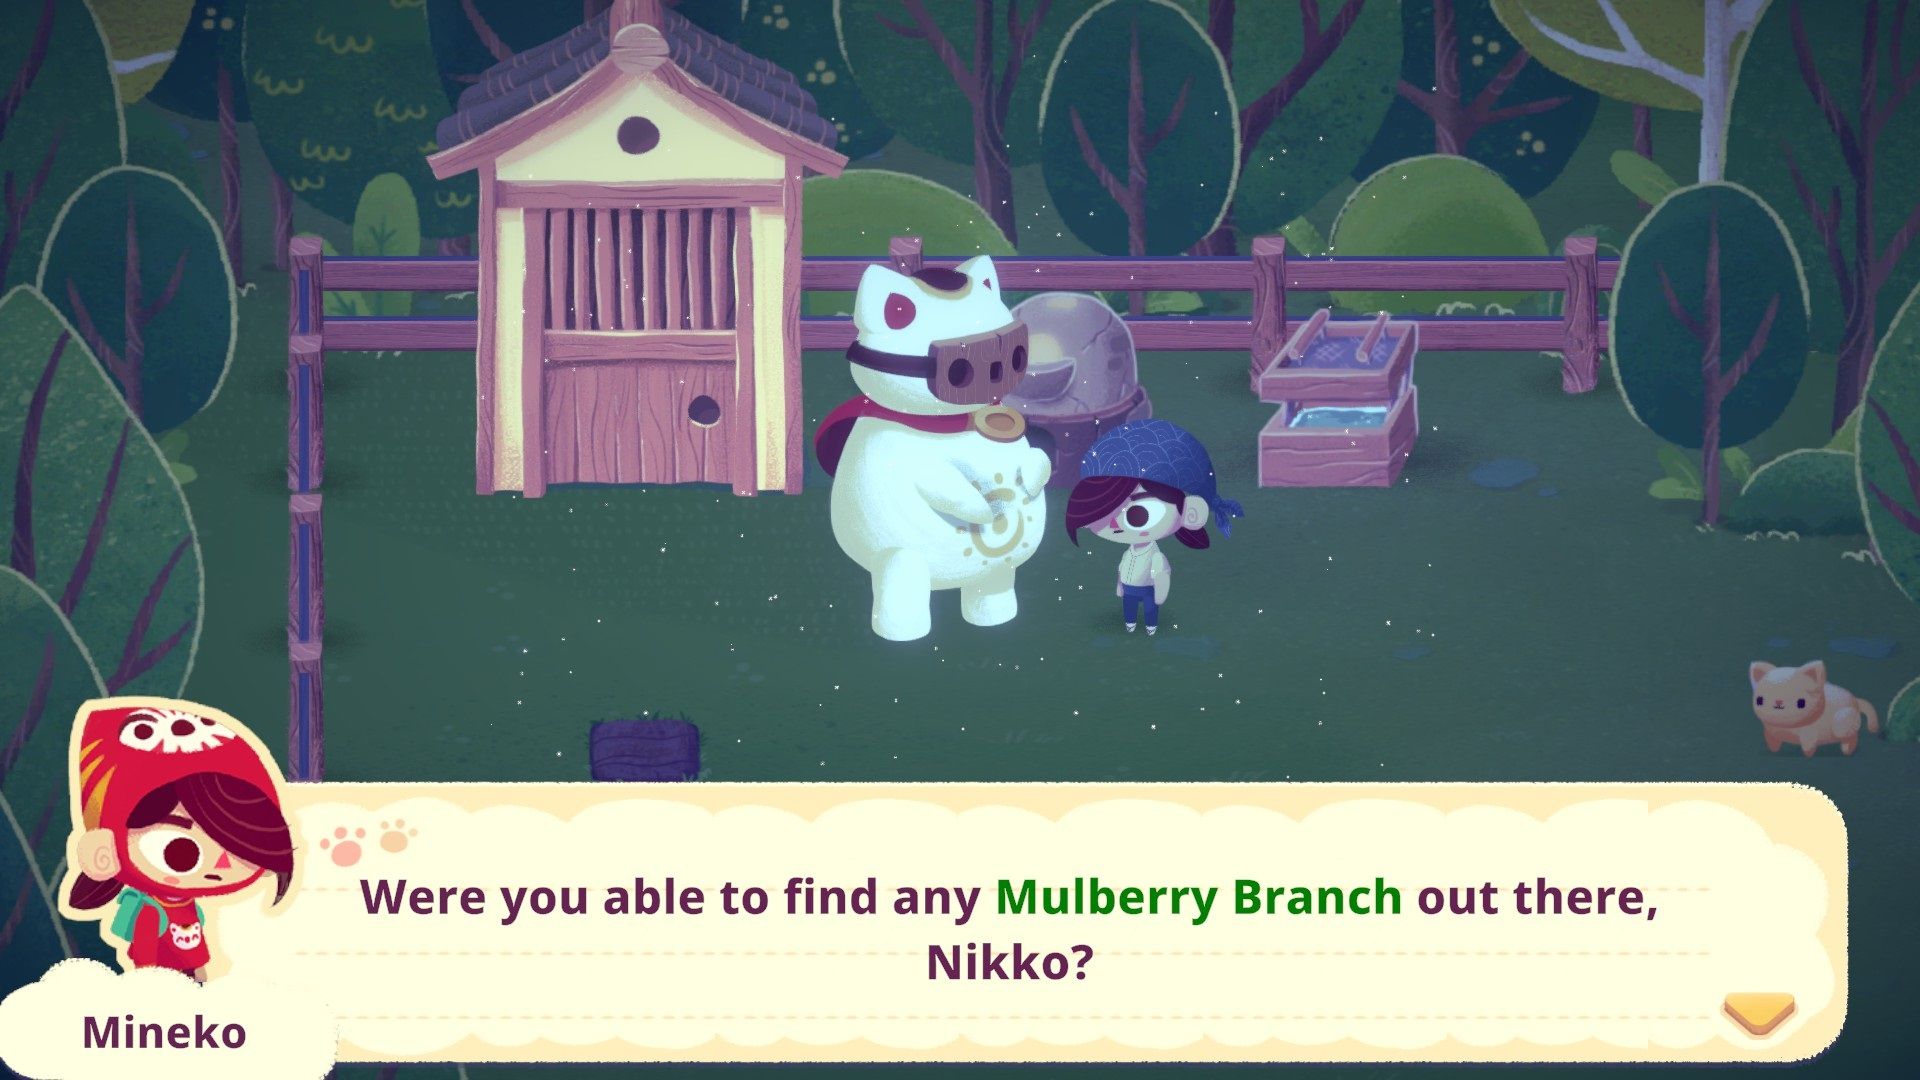 Minkeo getting resources from Nikko in the backyard of Mineko's Night Market.